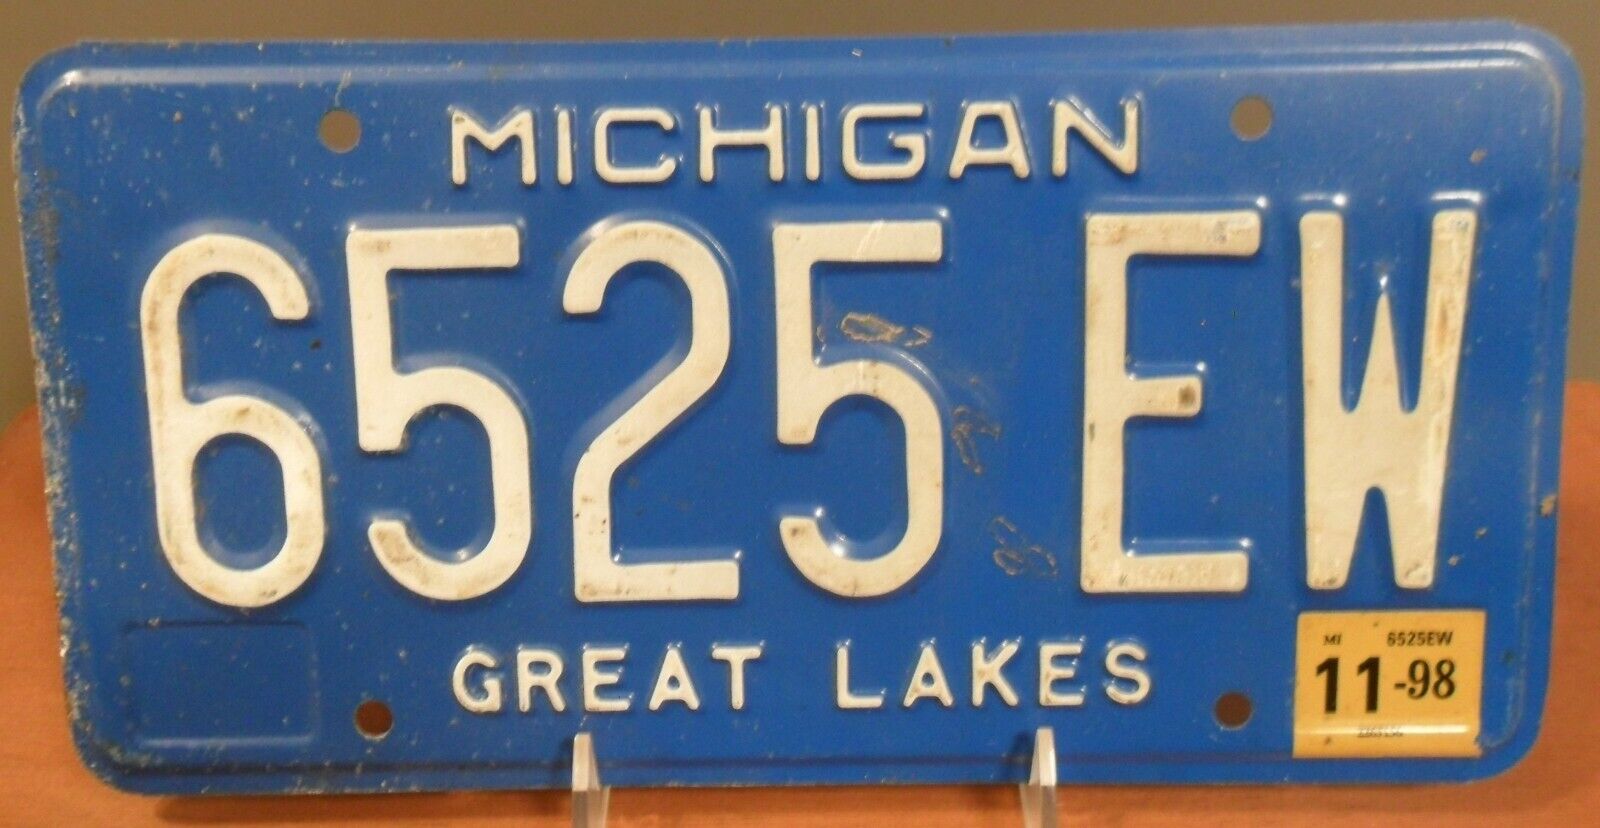 1983 - 2007 MICHIGAN, MI, GREAT LAKES License Plate 6525 EW 1998 Tag, Blue Plate